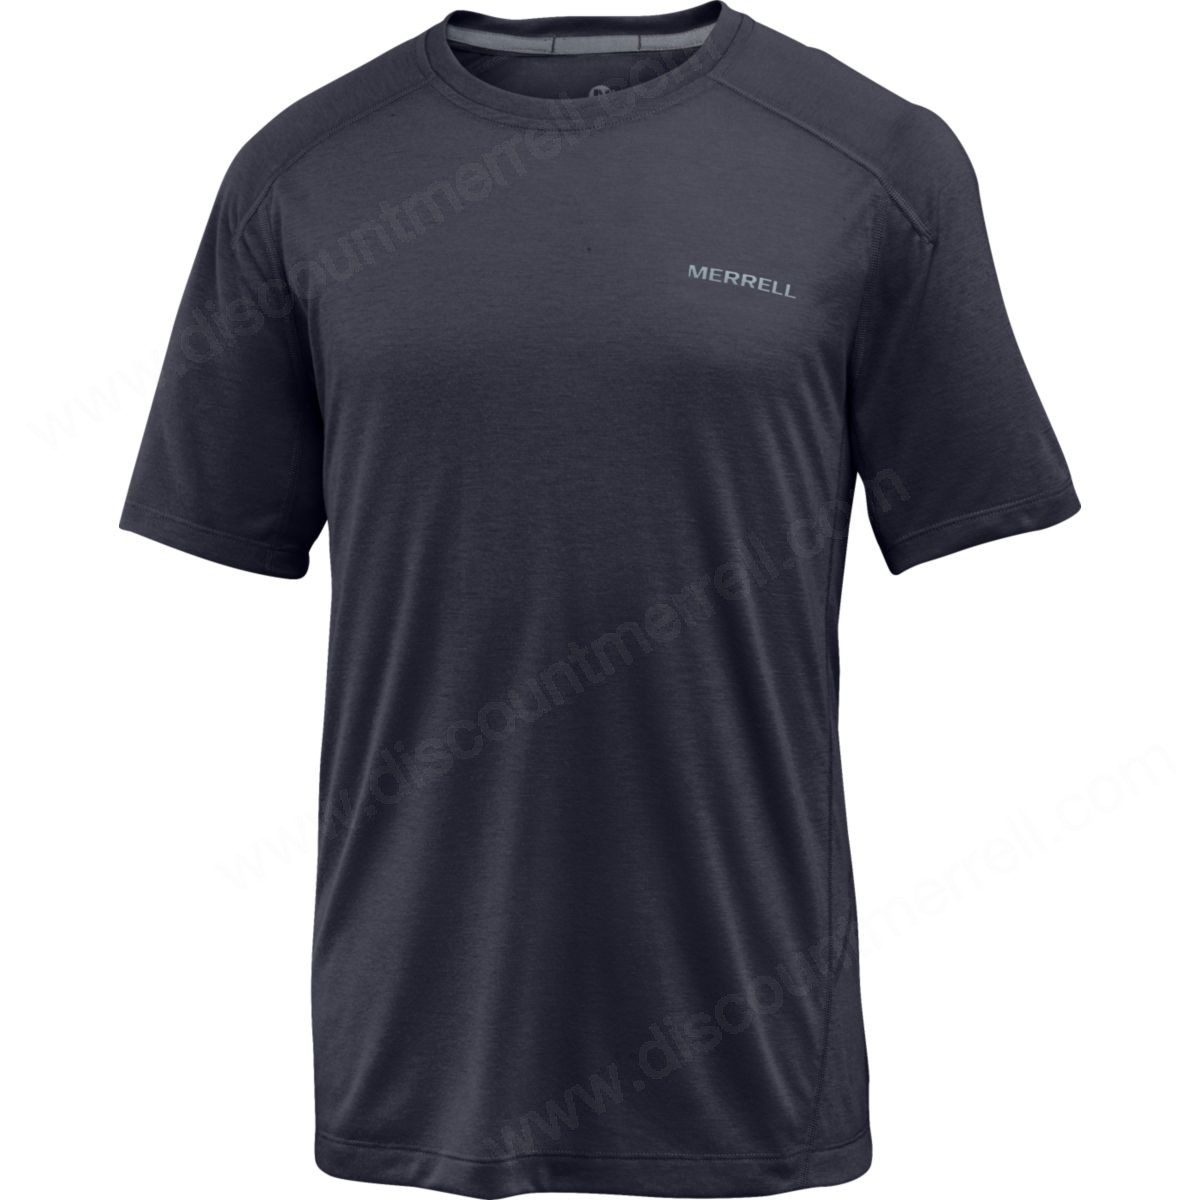 Merrell Mens's Paradox Short Sleeve Tech Shirts With Drirelease® Fabric Black - Merrell Mens's Paradox Short Sleeve Tech Shirts With Drirelease® Fabric Black